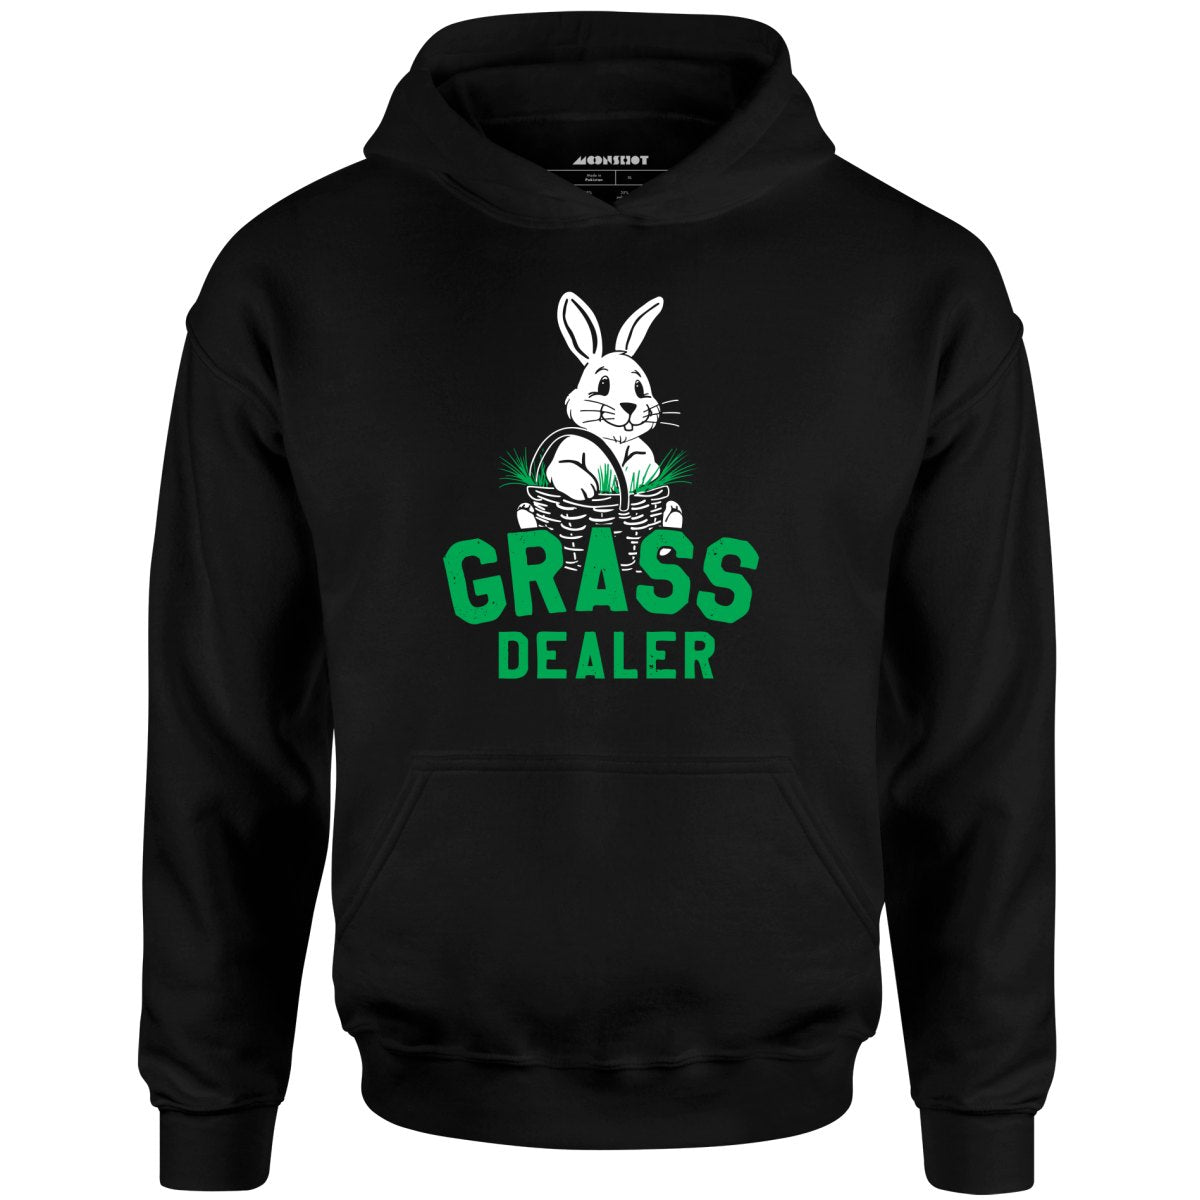 Grass Dealer - Unisex Hoodie